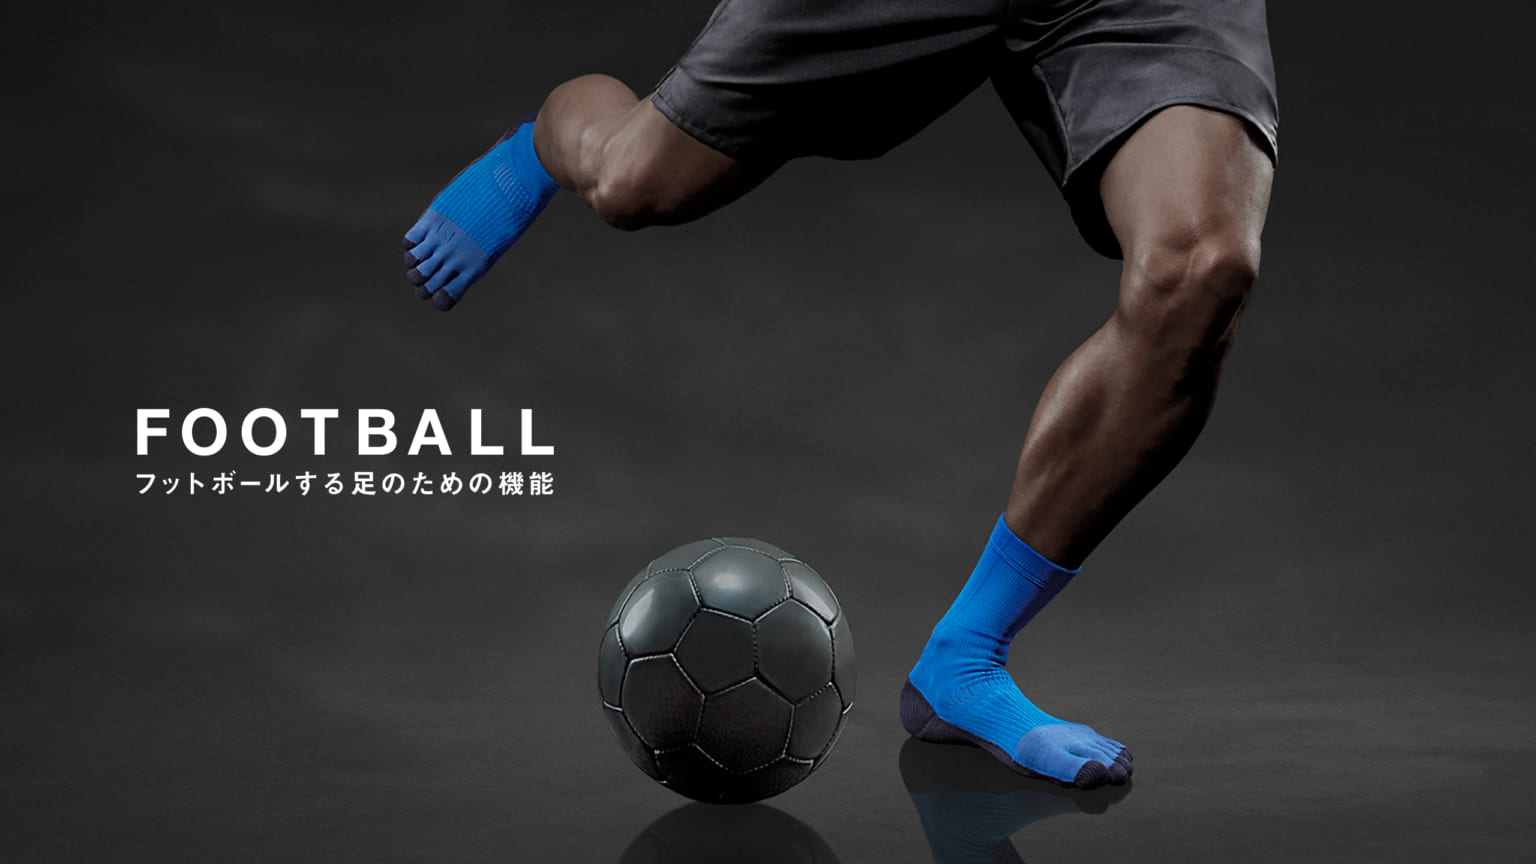 Tabio Sportsからサッカー フットサルソックスに特化したフットボールソックスが登場 靴下屋公式通販 Tabio オンラインストア